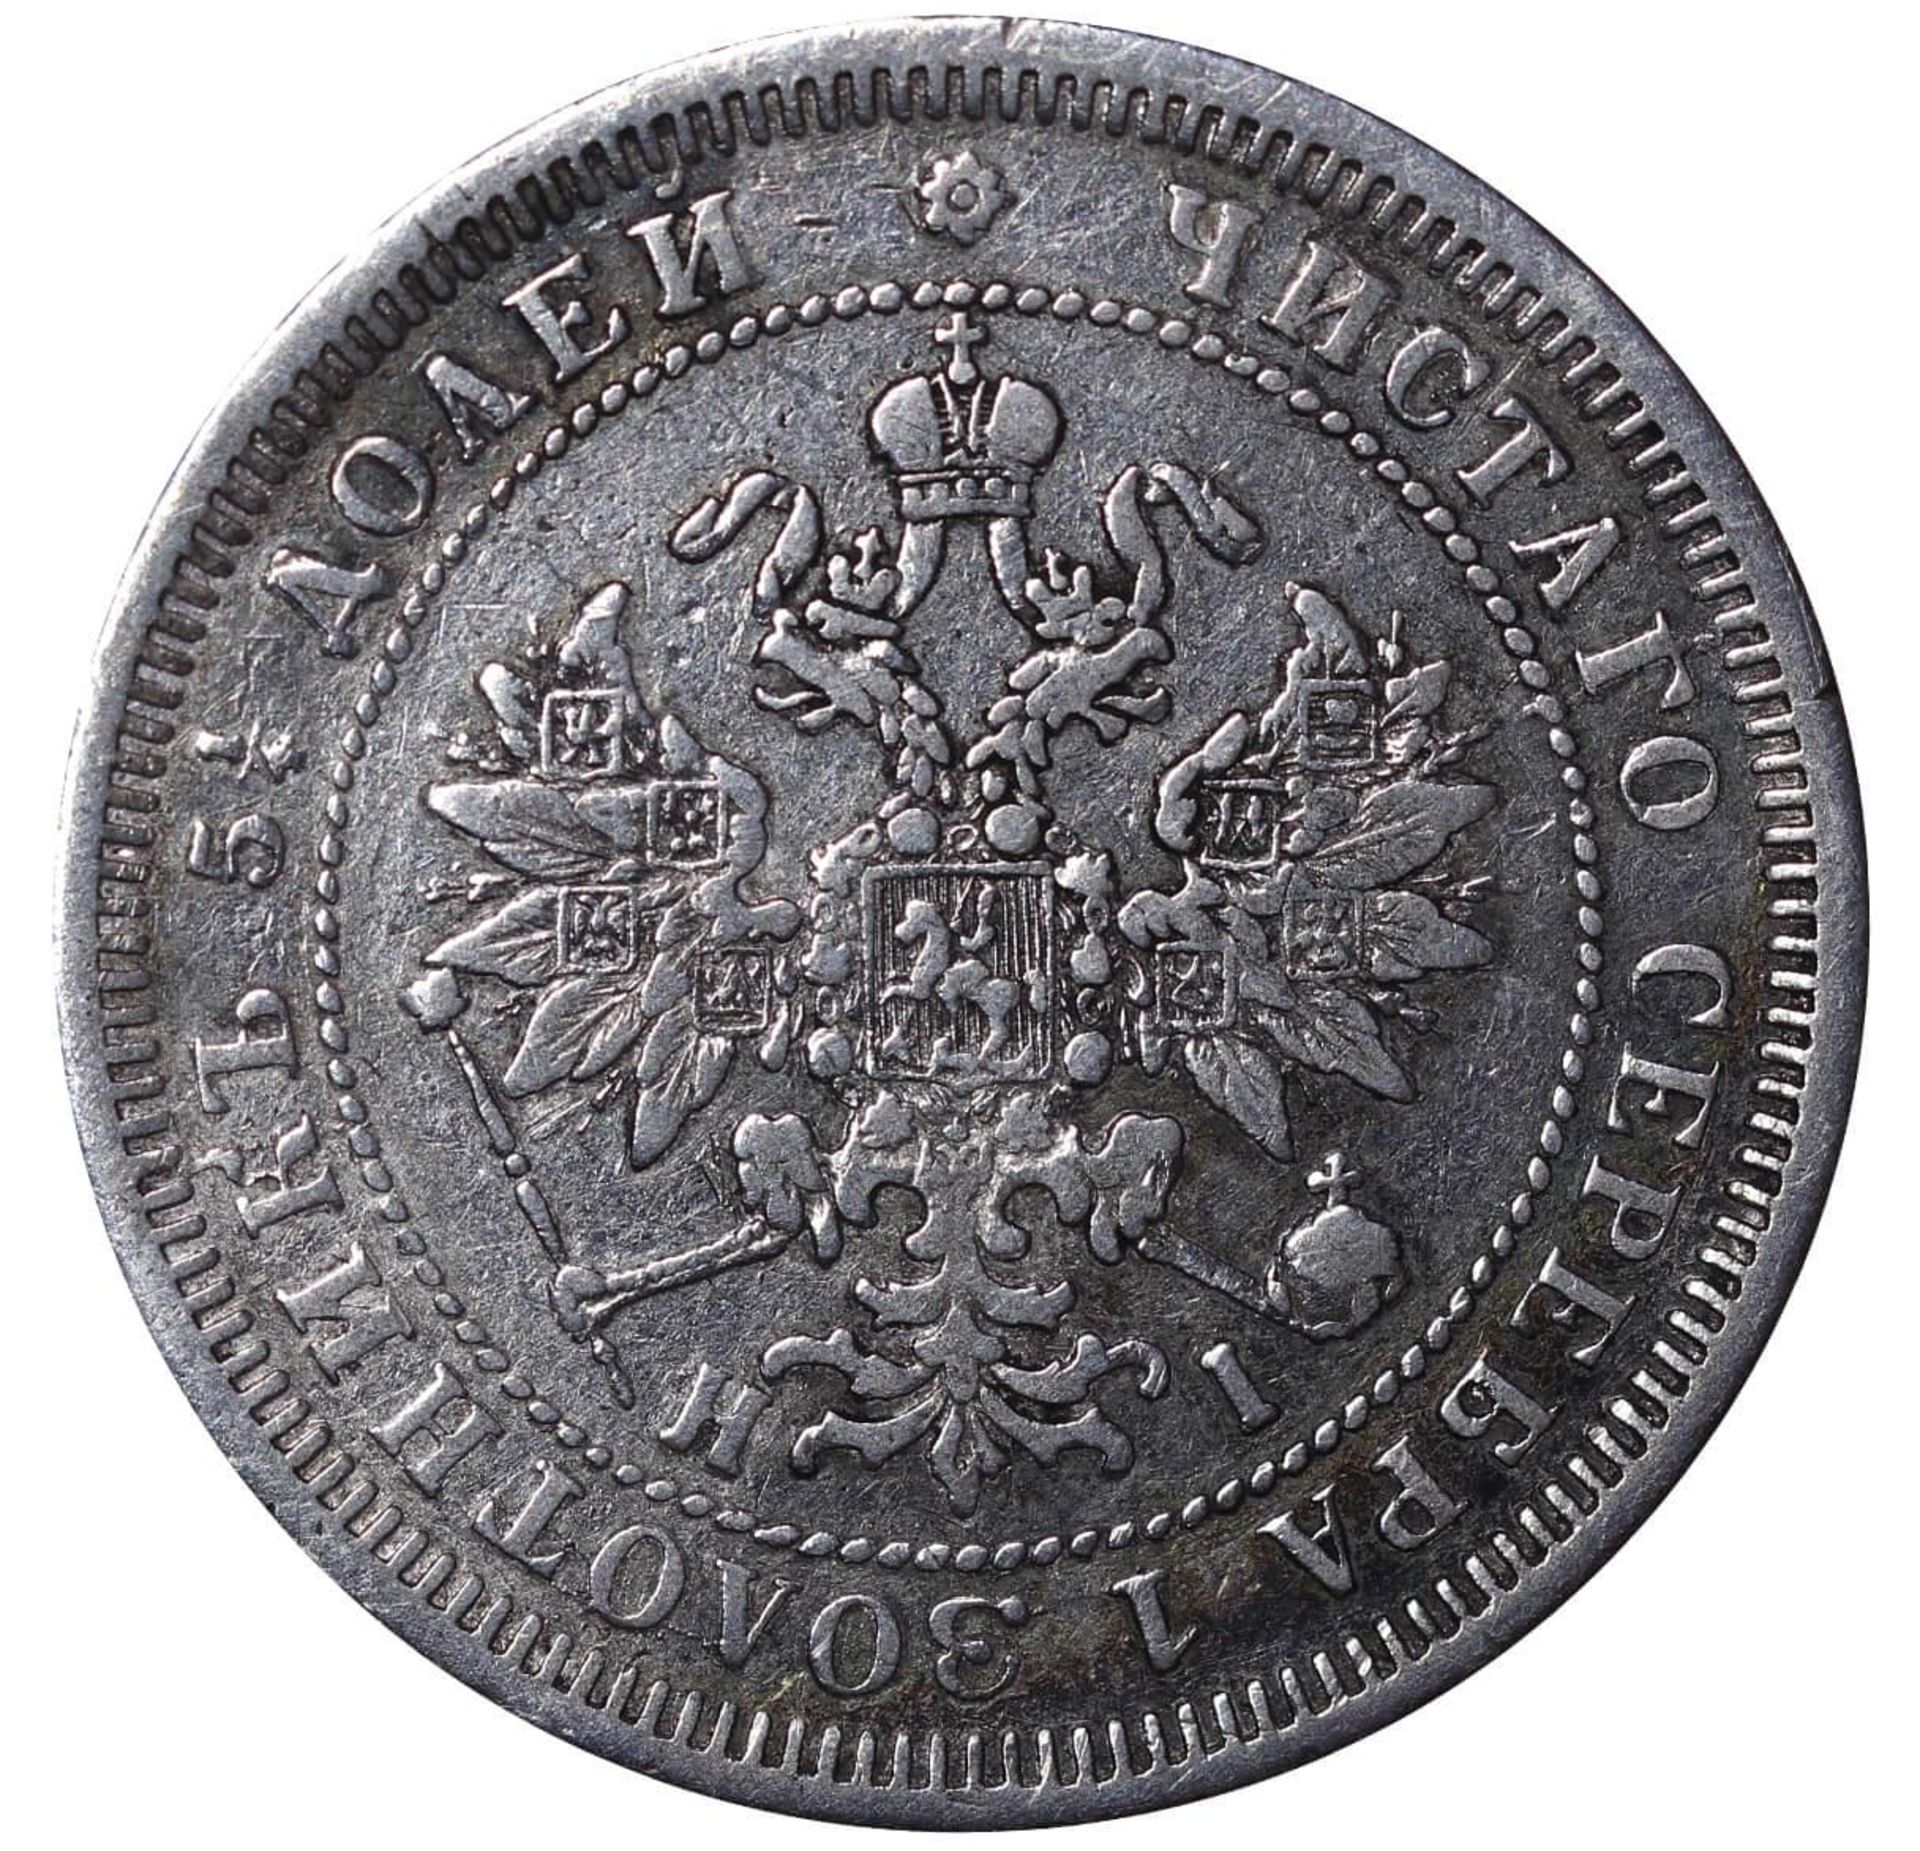 Russian Empire, 25 Kopecks, 1876 year, SPB-NI - Image 3 of 3